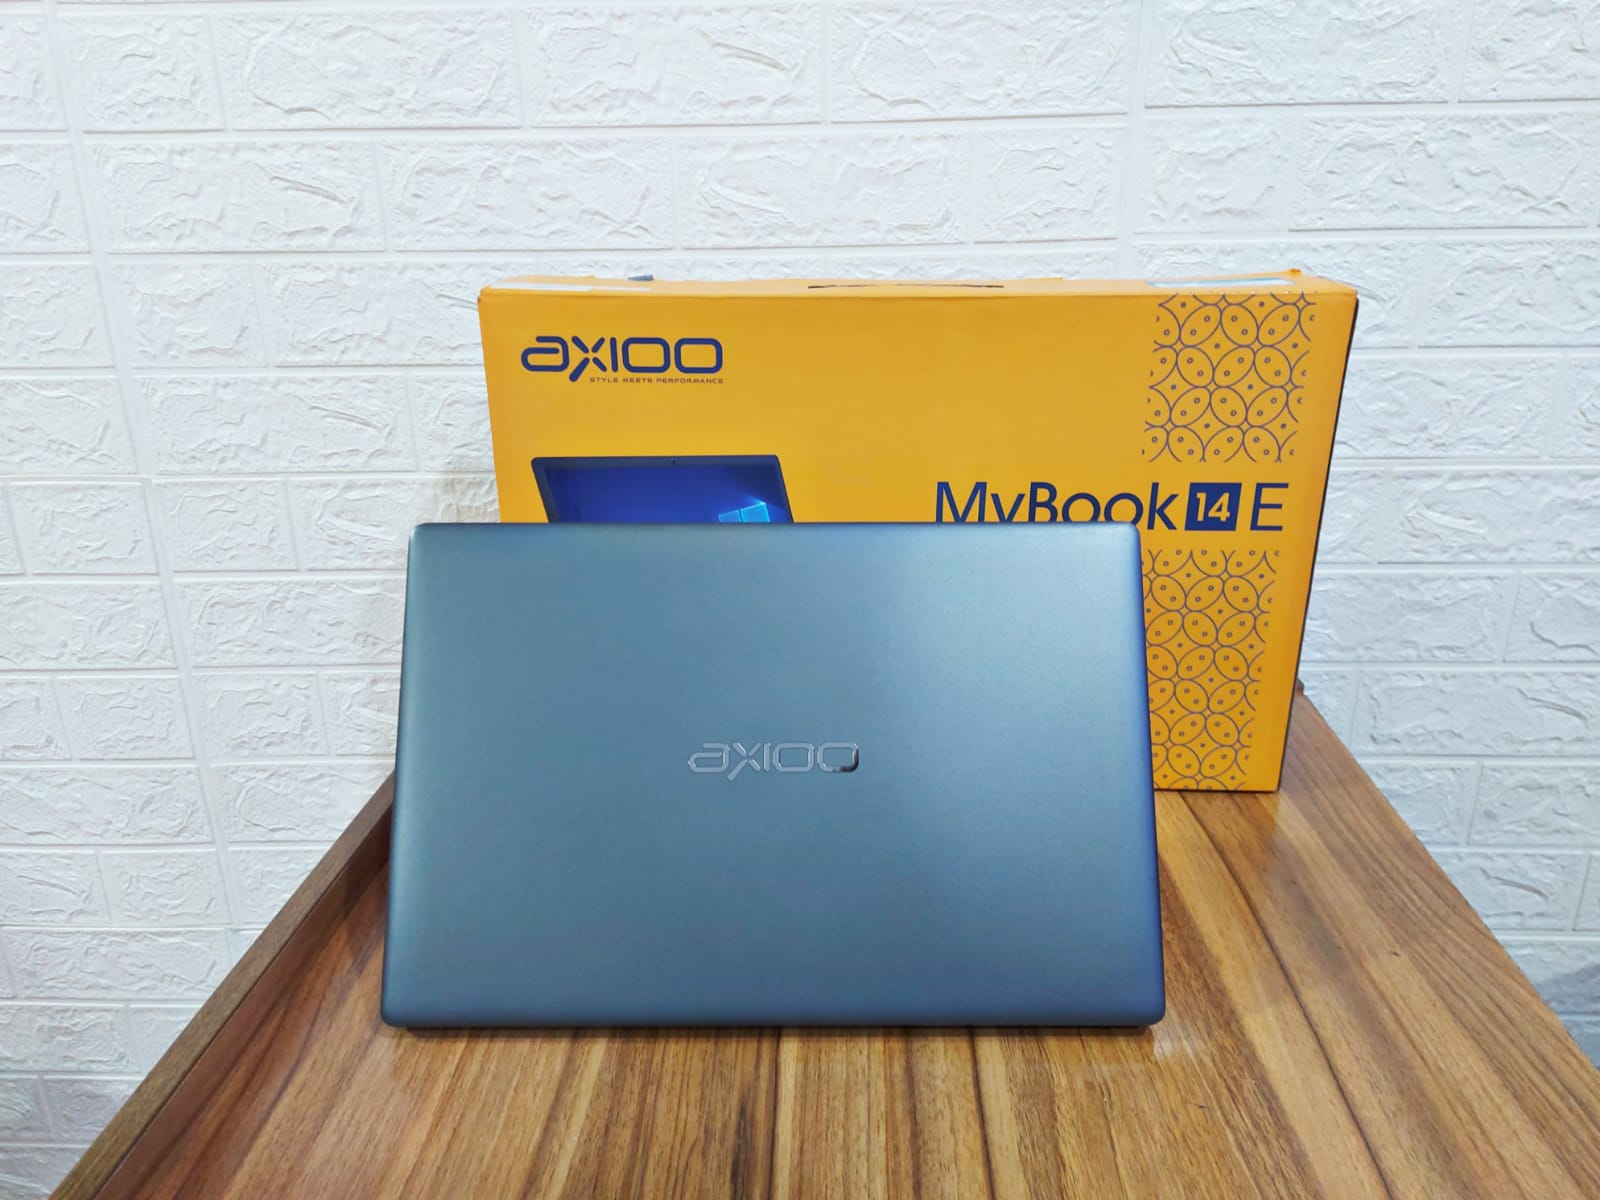 Axioo MyBook 14E: Laptop dengan Performa Prosesor Tinggi serta Harga yang Terjangkau